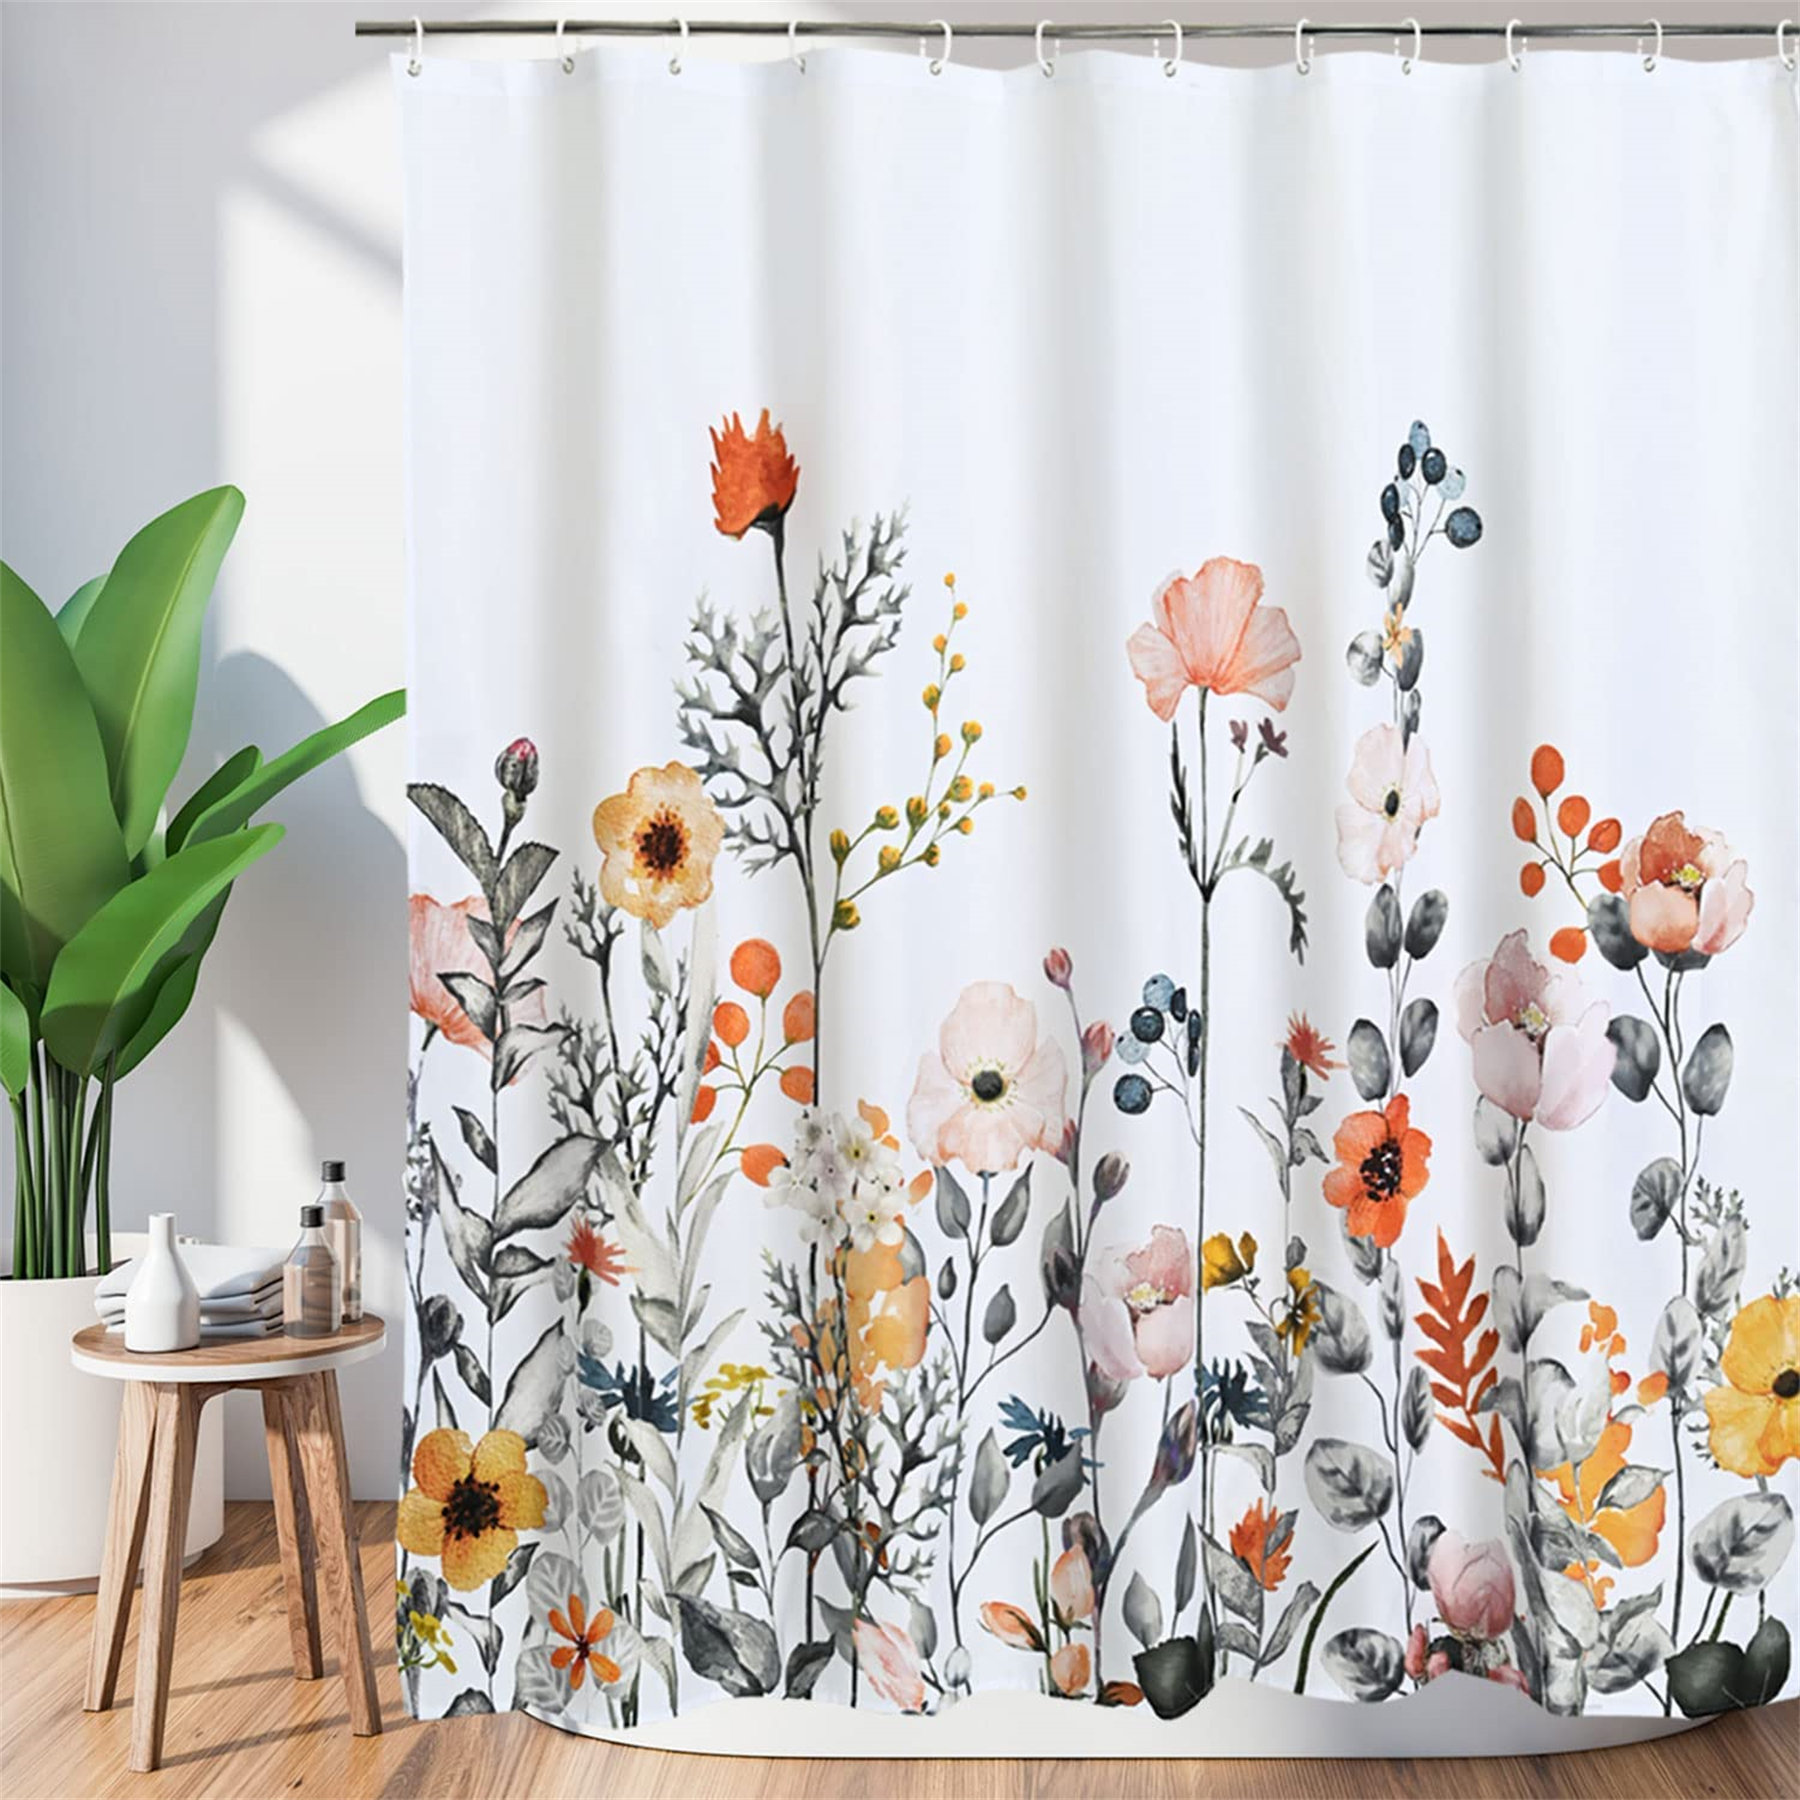 Waterproof Shower Curtain Flower Print Bathroom Decor Shower Curtain Art Decor 